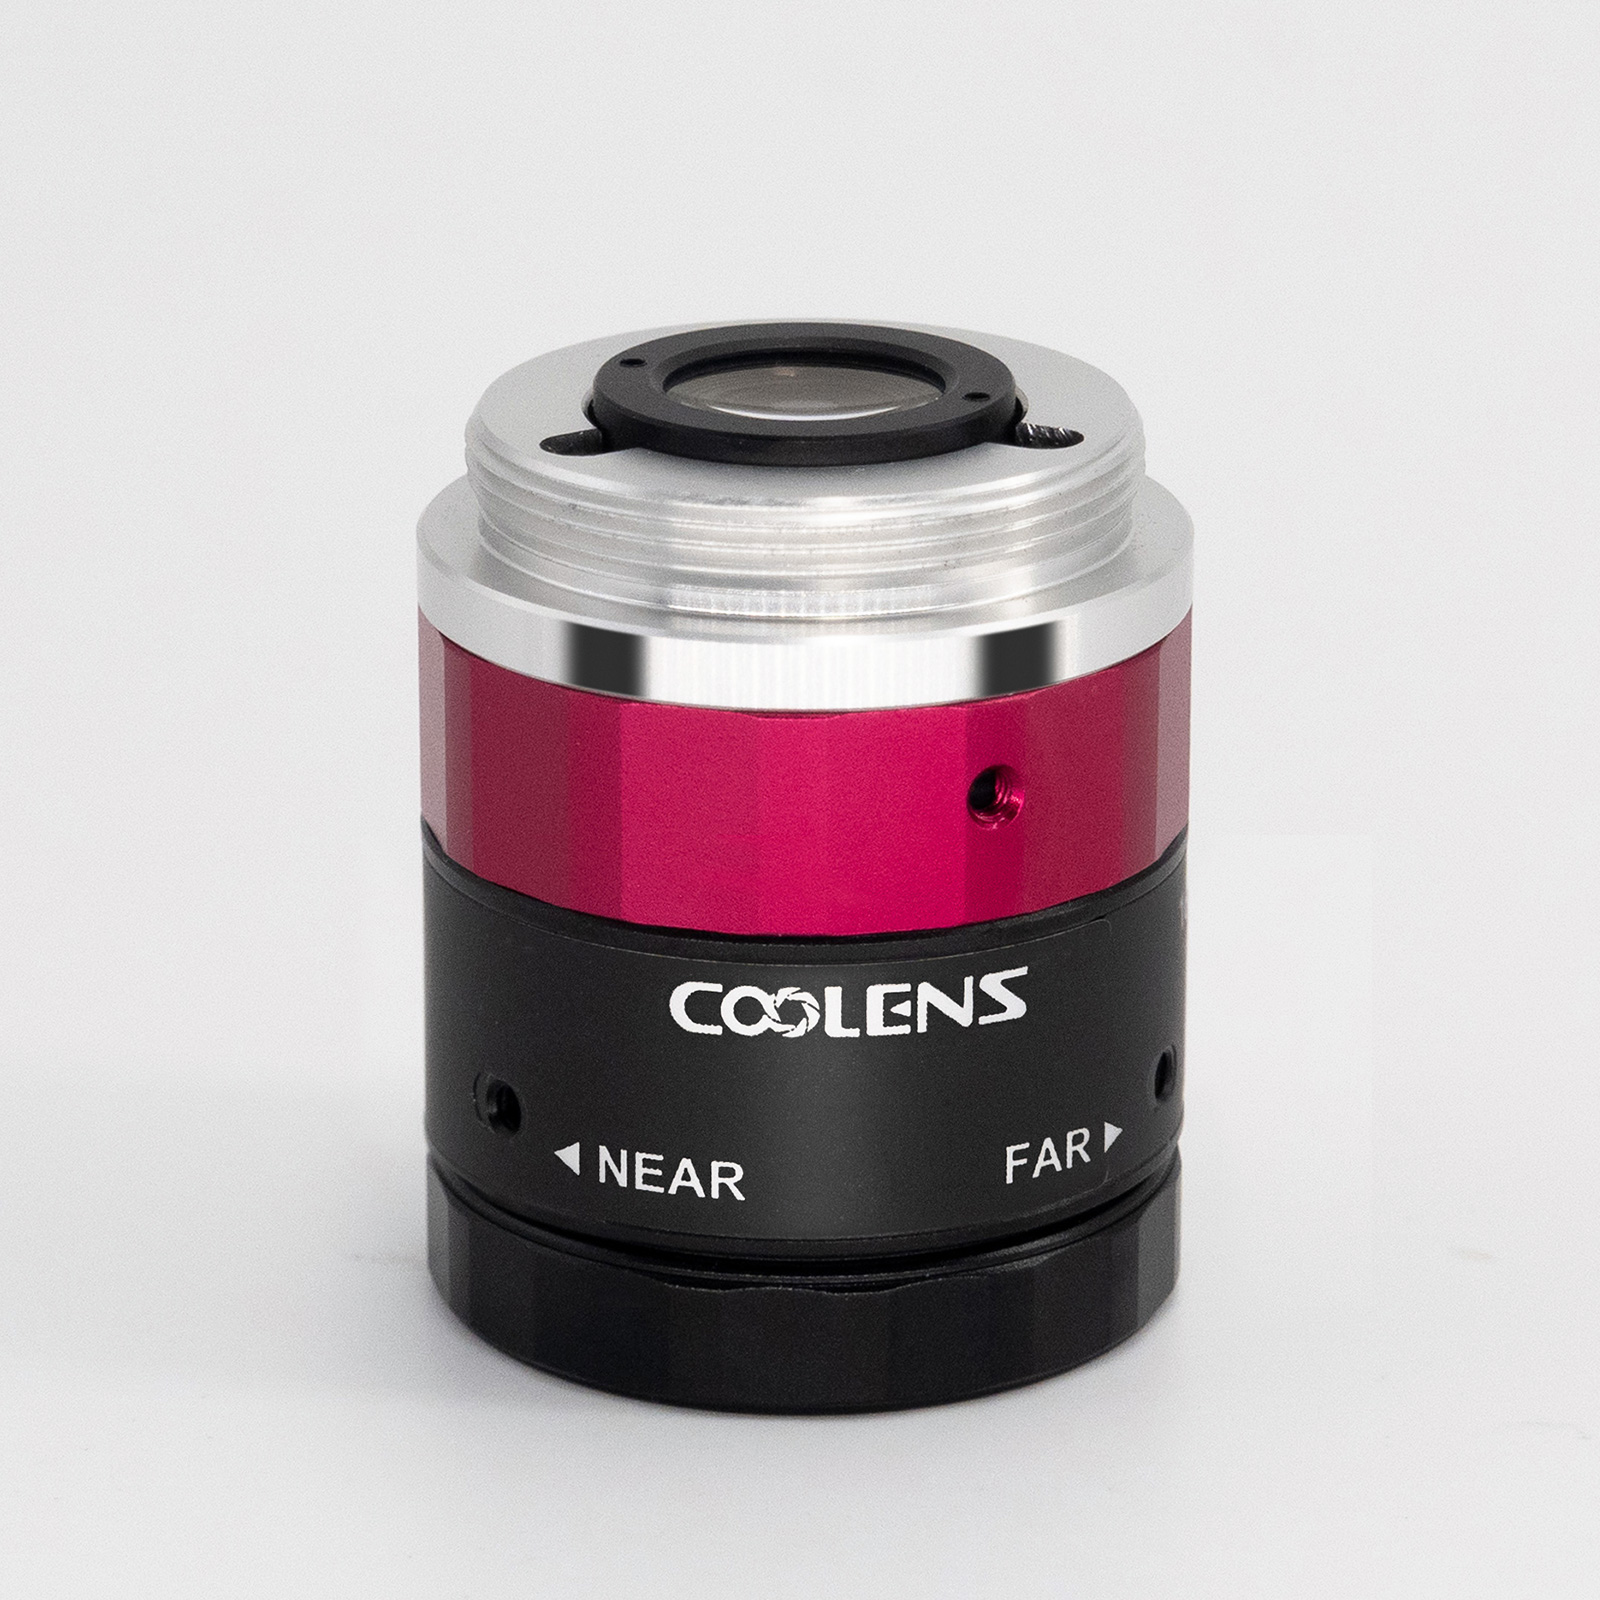 1/1.8" f16 Fixed Focus Lens